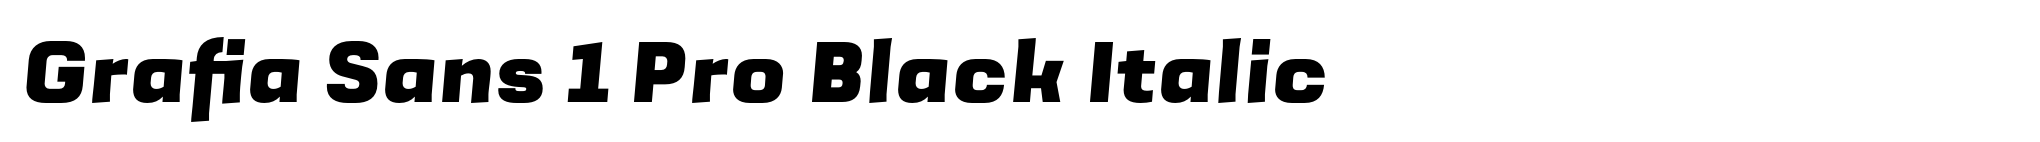 Grafia Sans 1 Pro Black Italic image